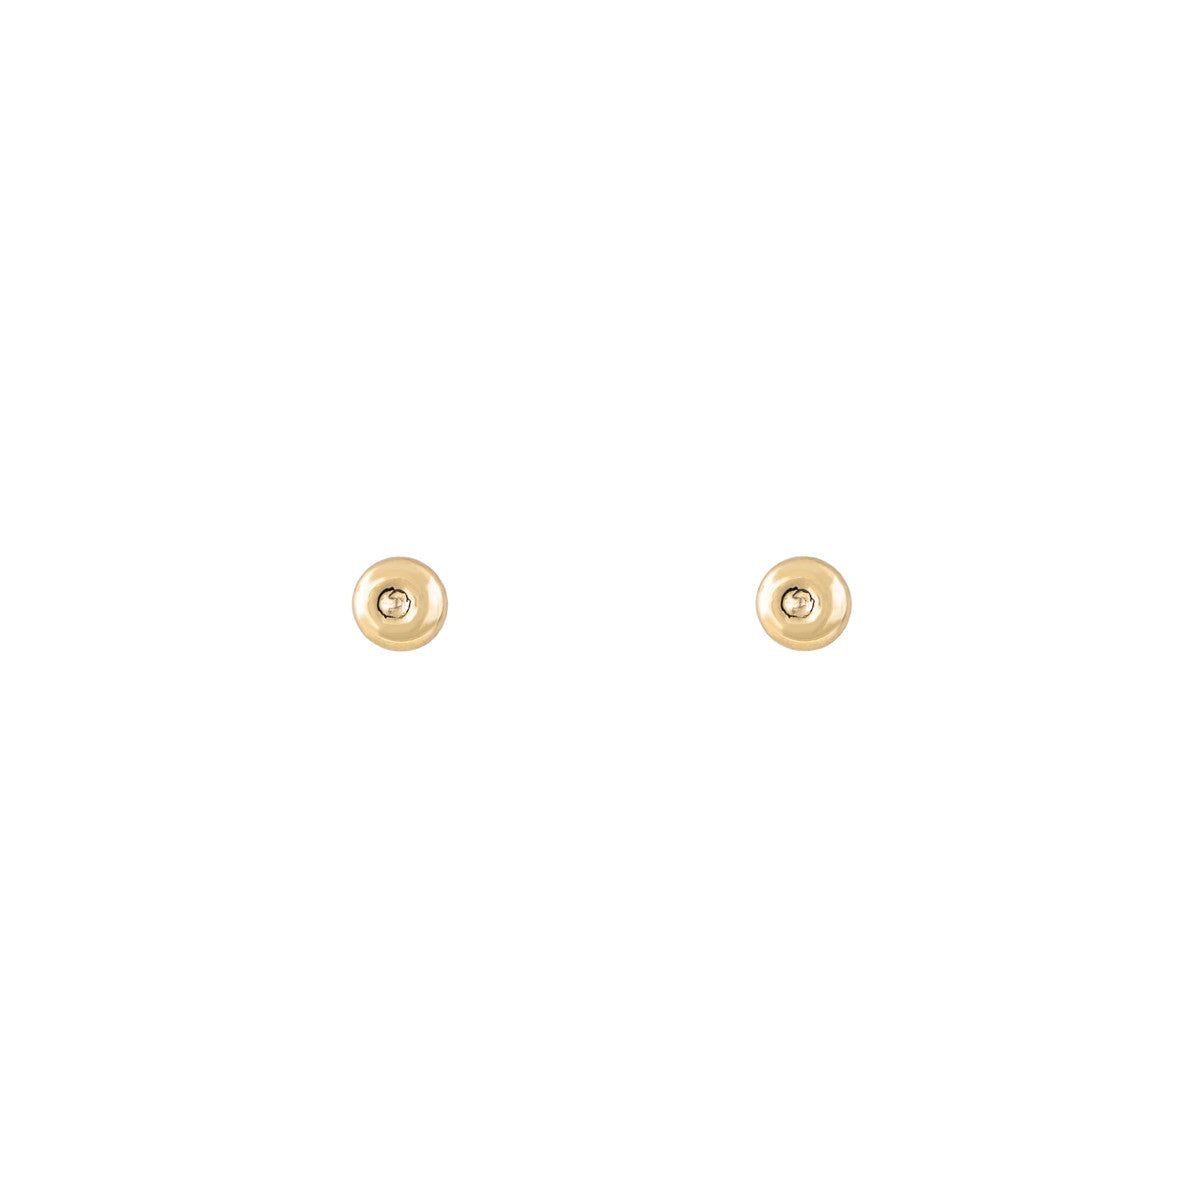 donut stud earrings PRE 405 14KY